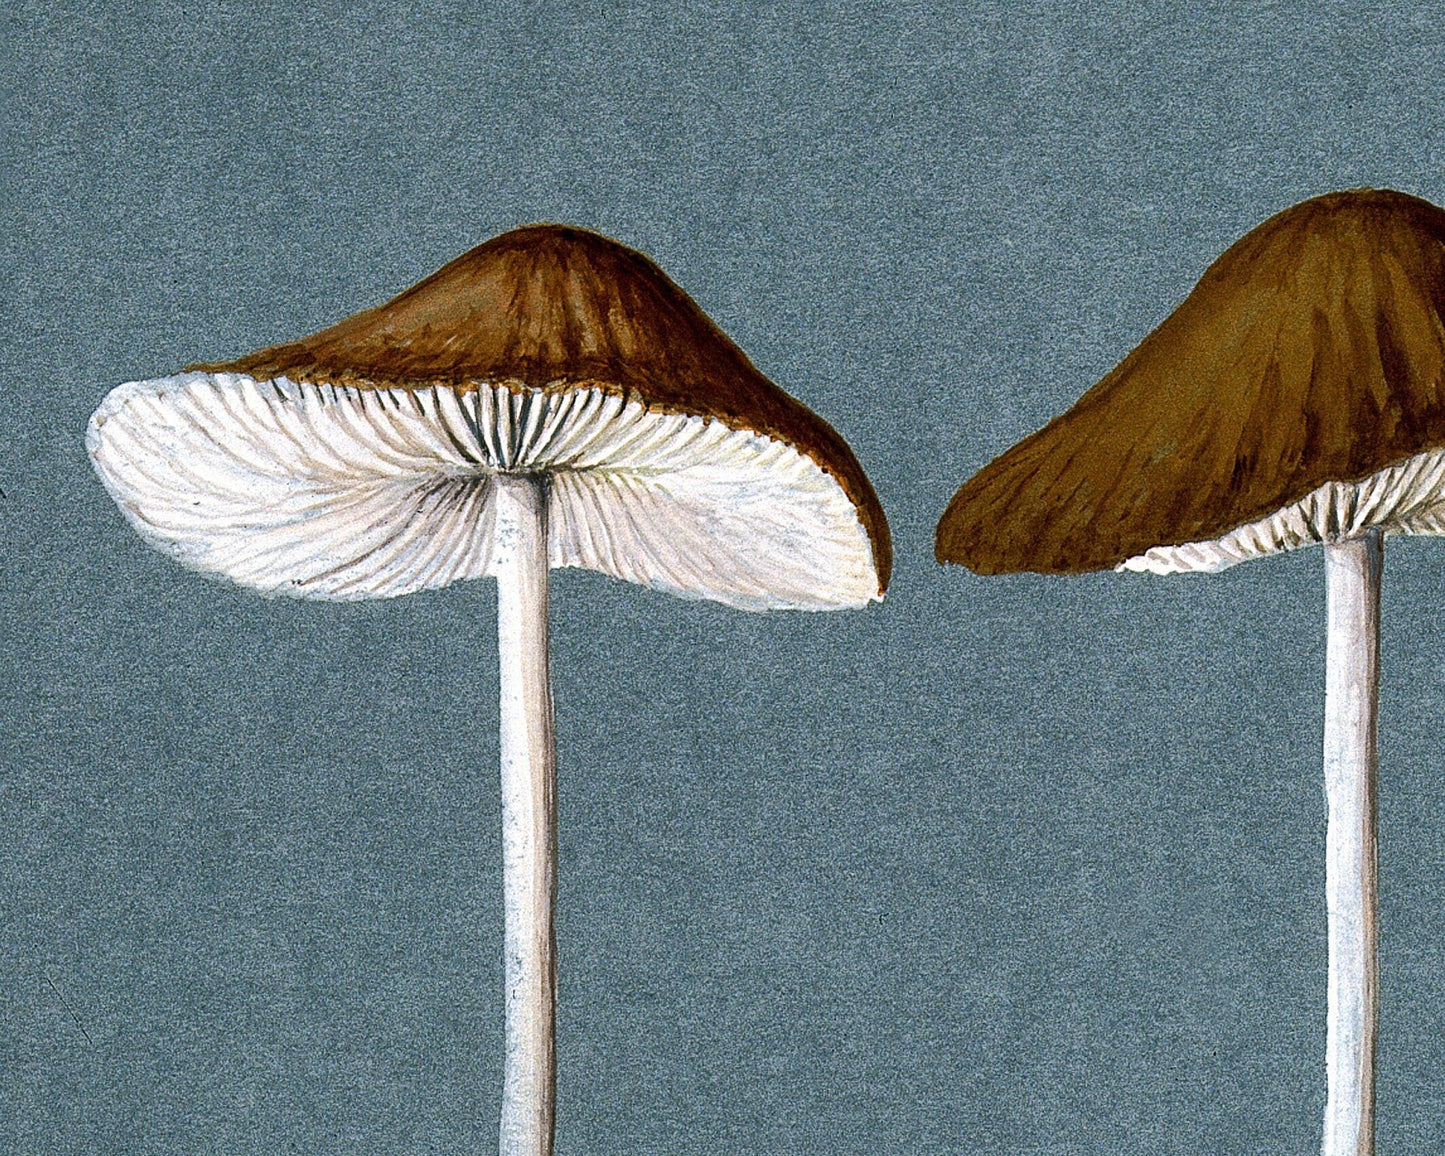 Vintage mushroom art print | Fungus, fungi illustration | Antique botanical print | Natural History wall art | Modern vintage decor